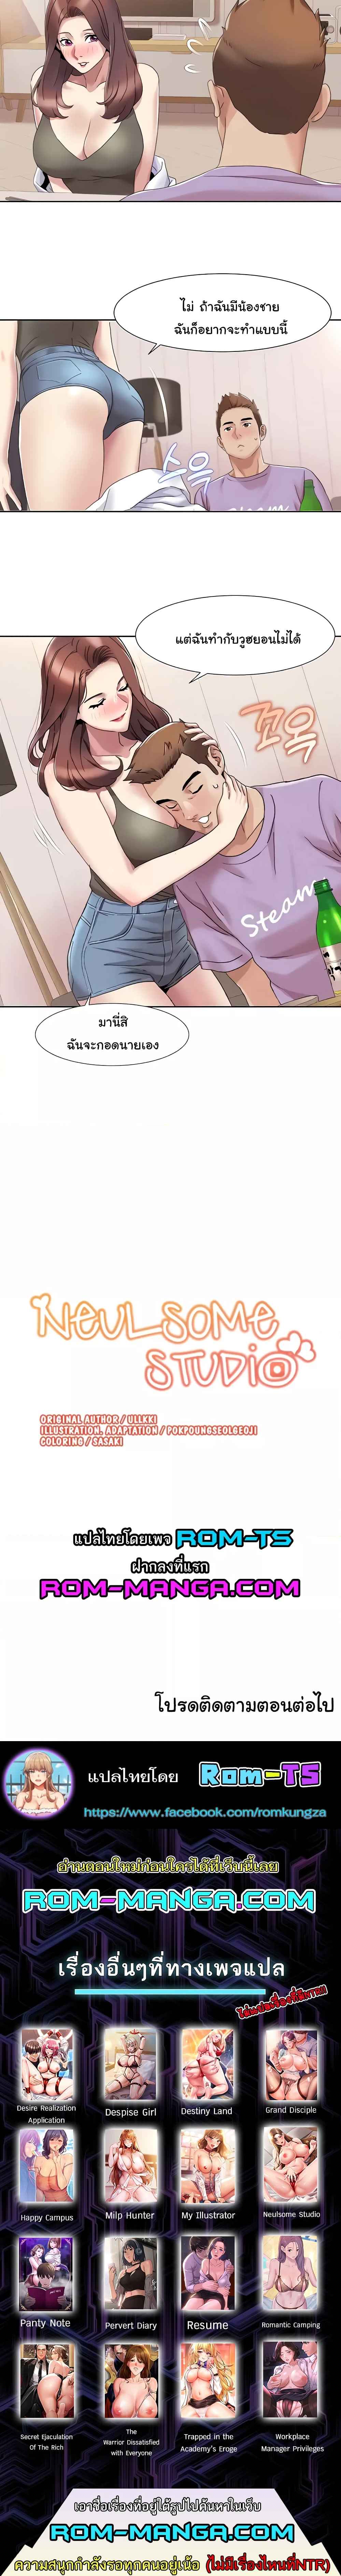 Neulsome Studio 16 4